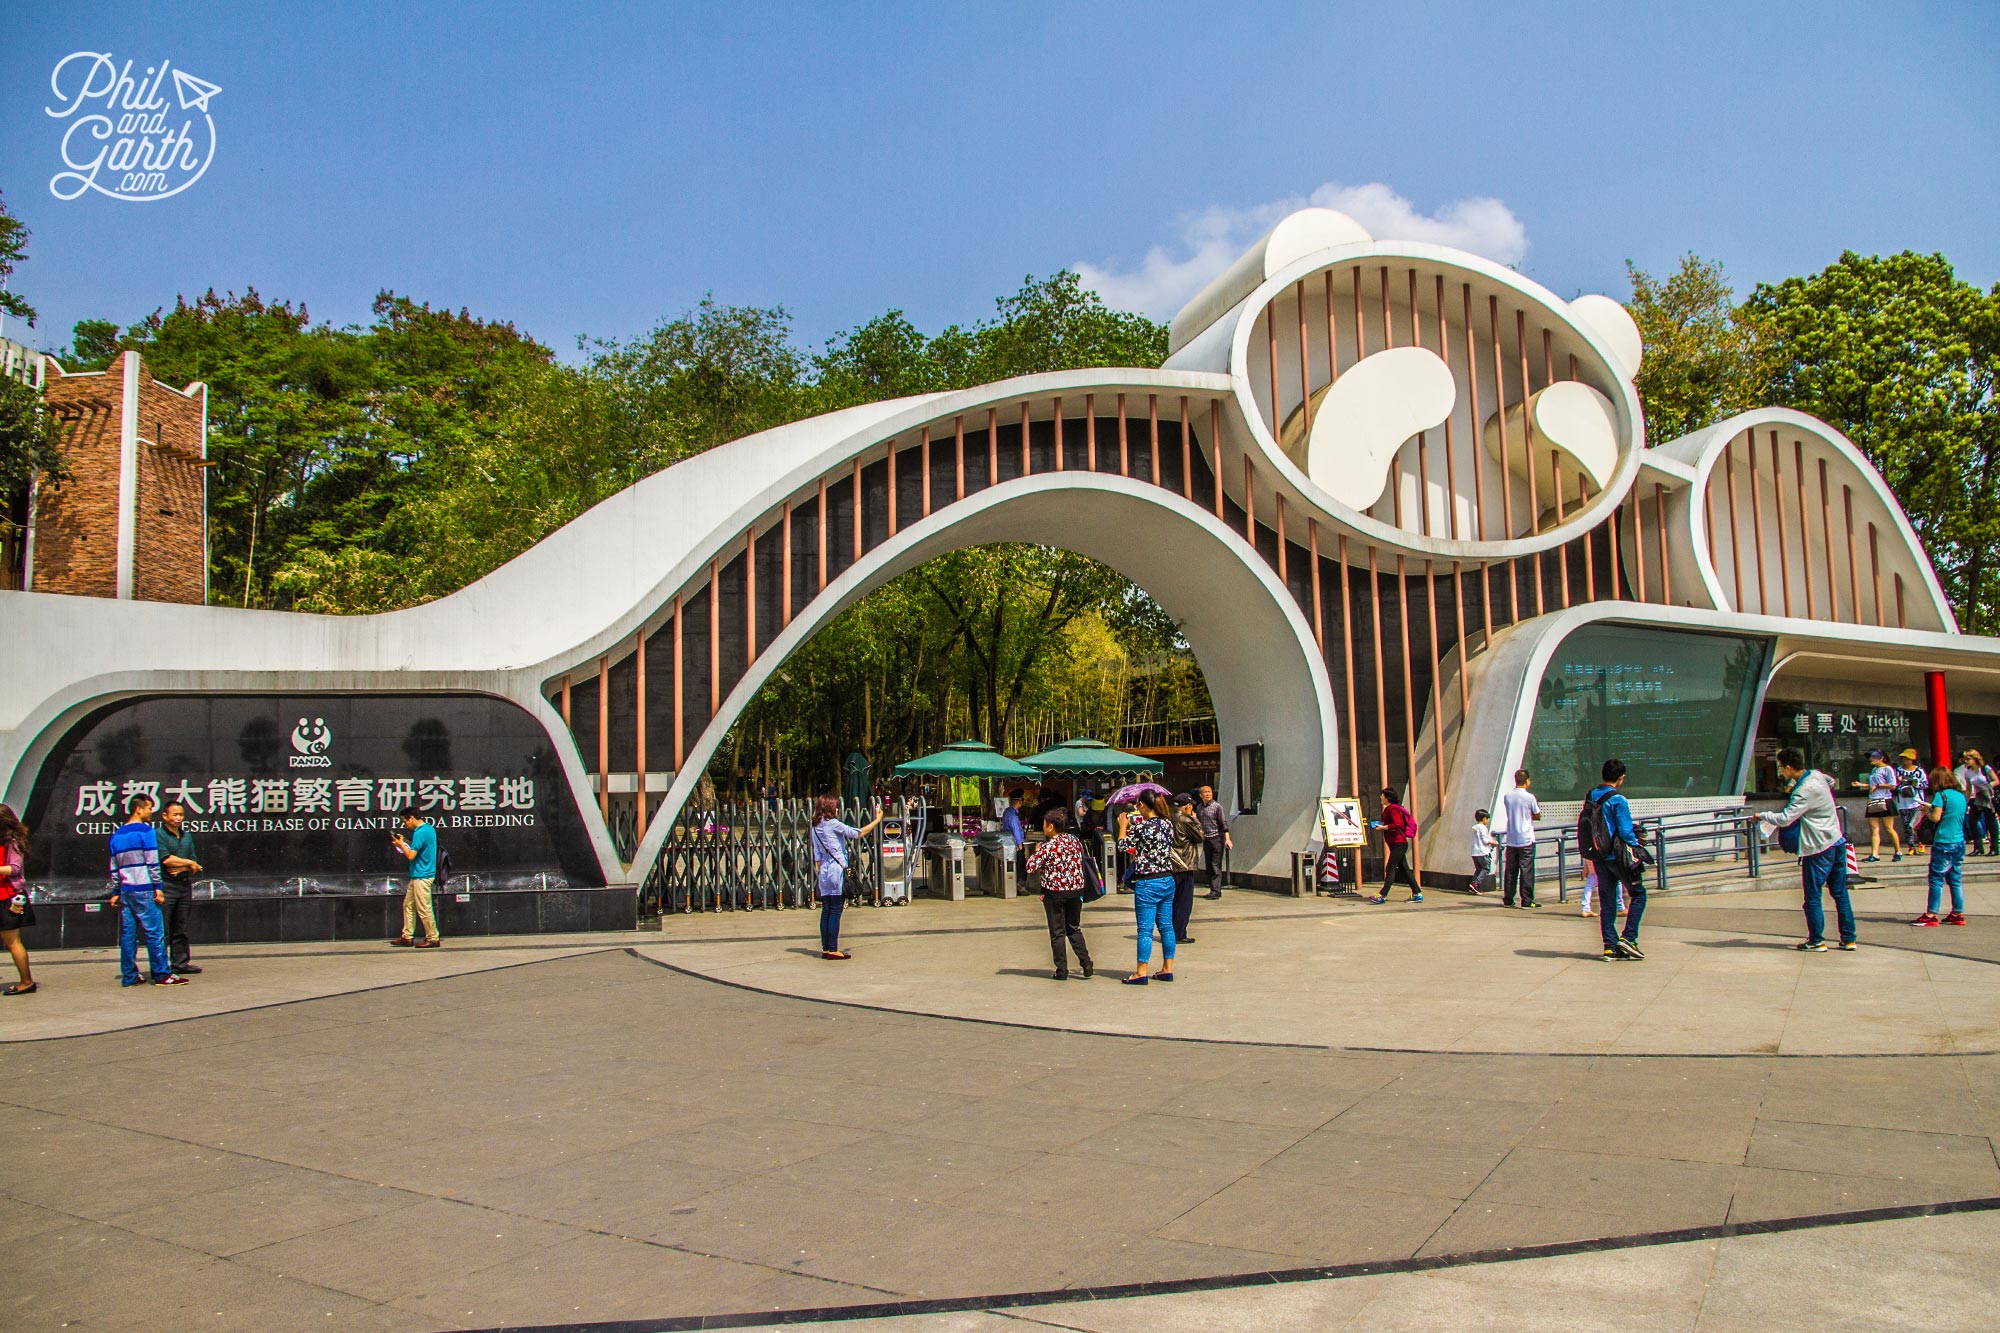 The Disneyland style entrance of the Chengdu Research Base of Giant Panda Breeding